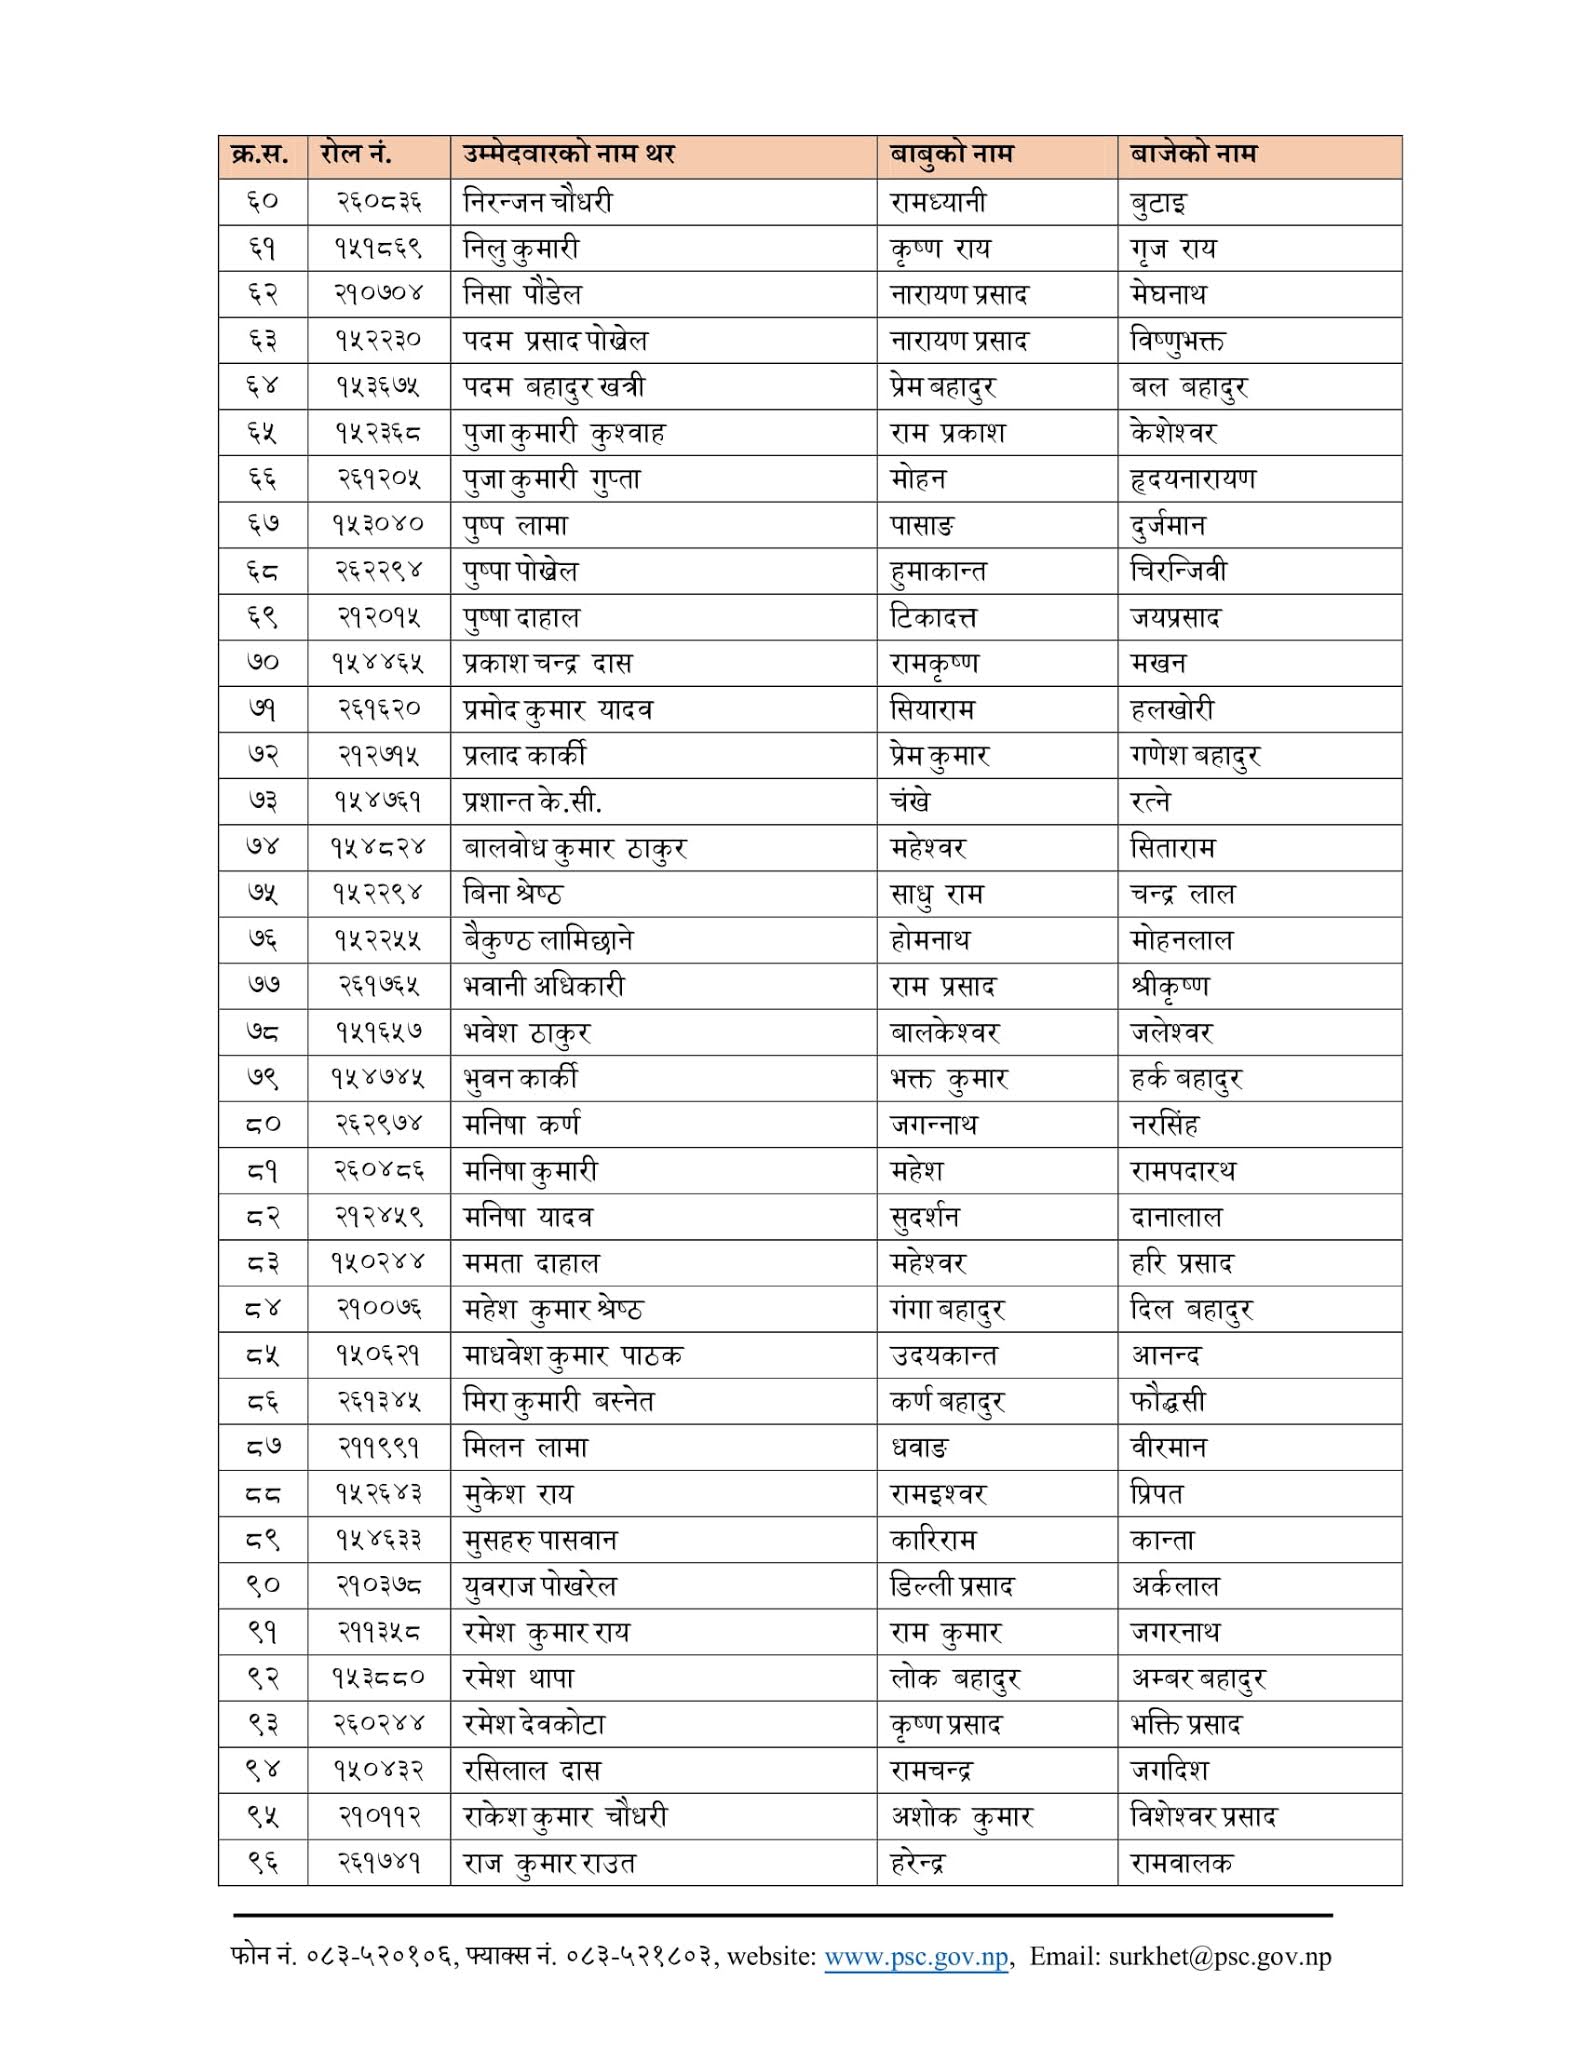 Jaleshwor Lok Sewa Aayog Written Exam Result & Exam Schedule of NASU published by Surkhet Lok Sewa Aayog